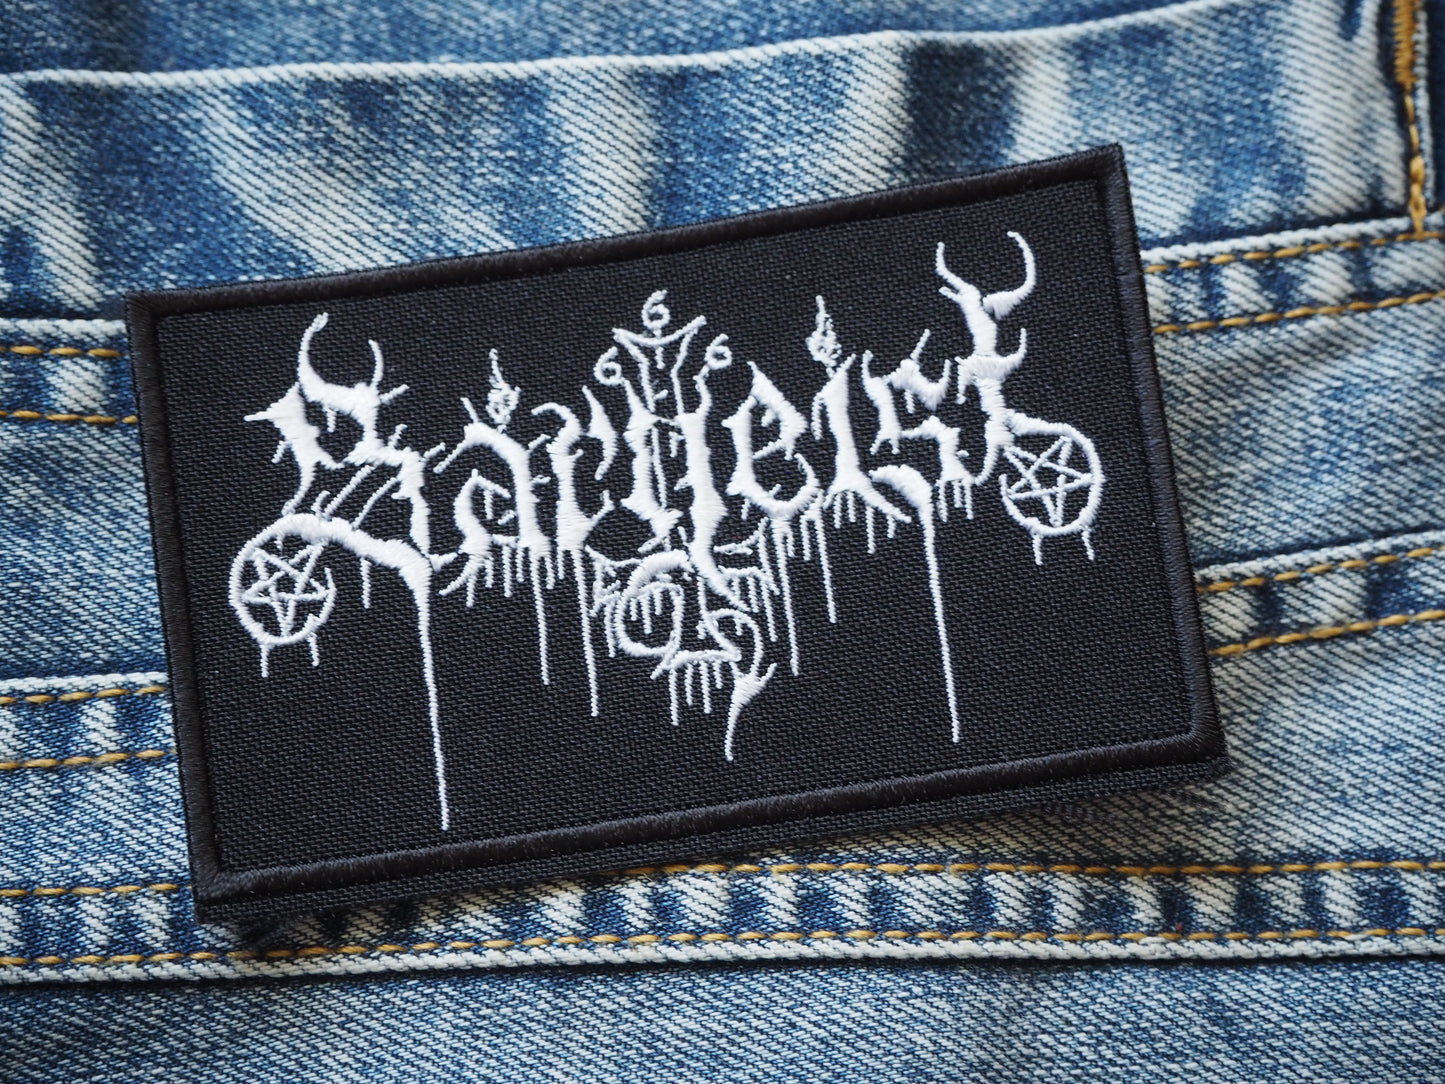 Sargeist Satanic Black Metal Embroidered Patch